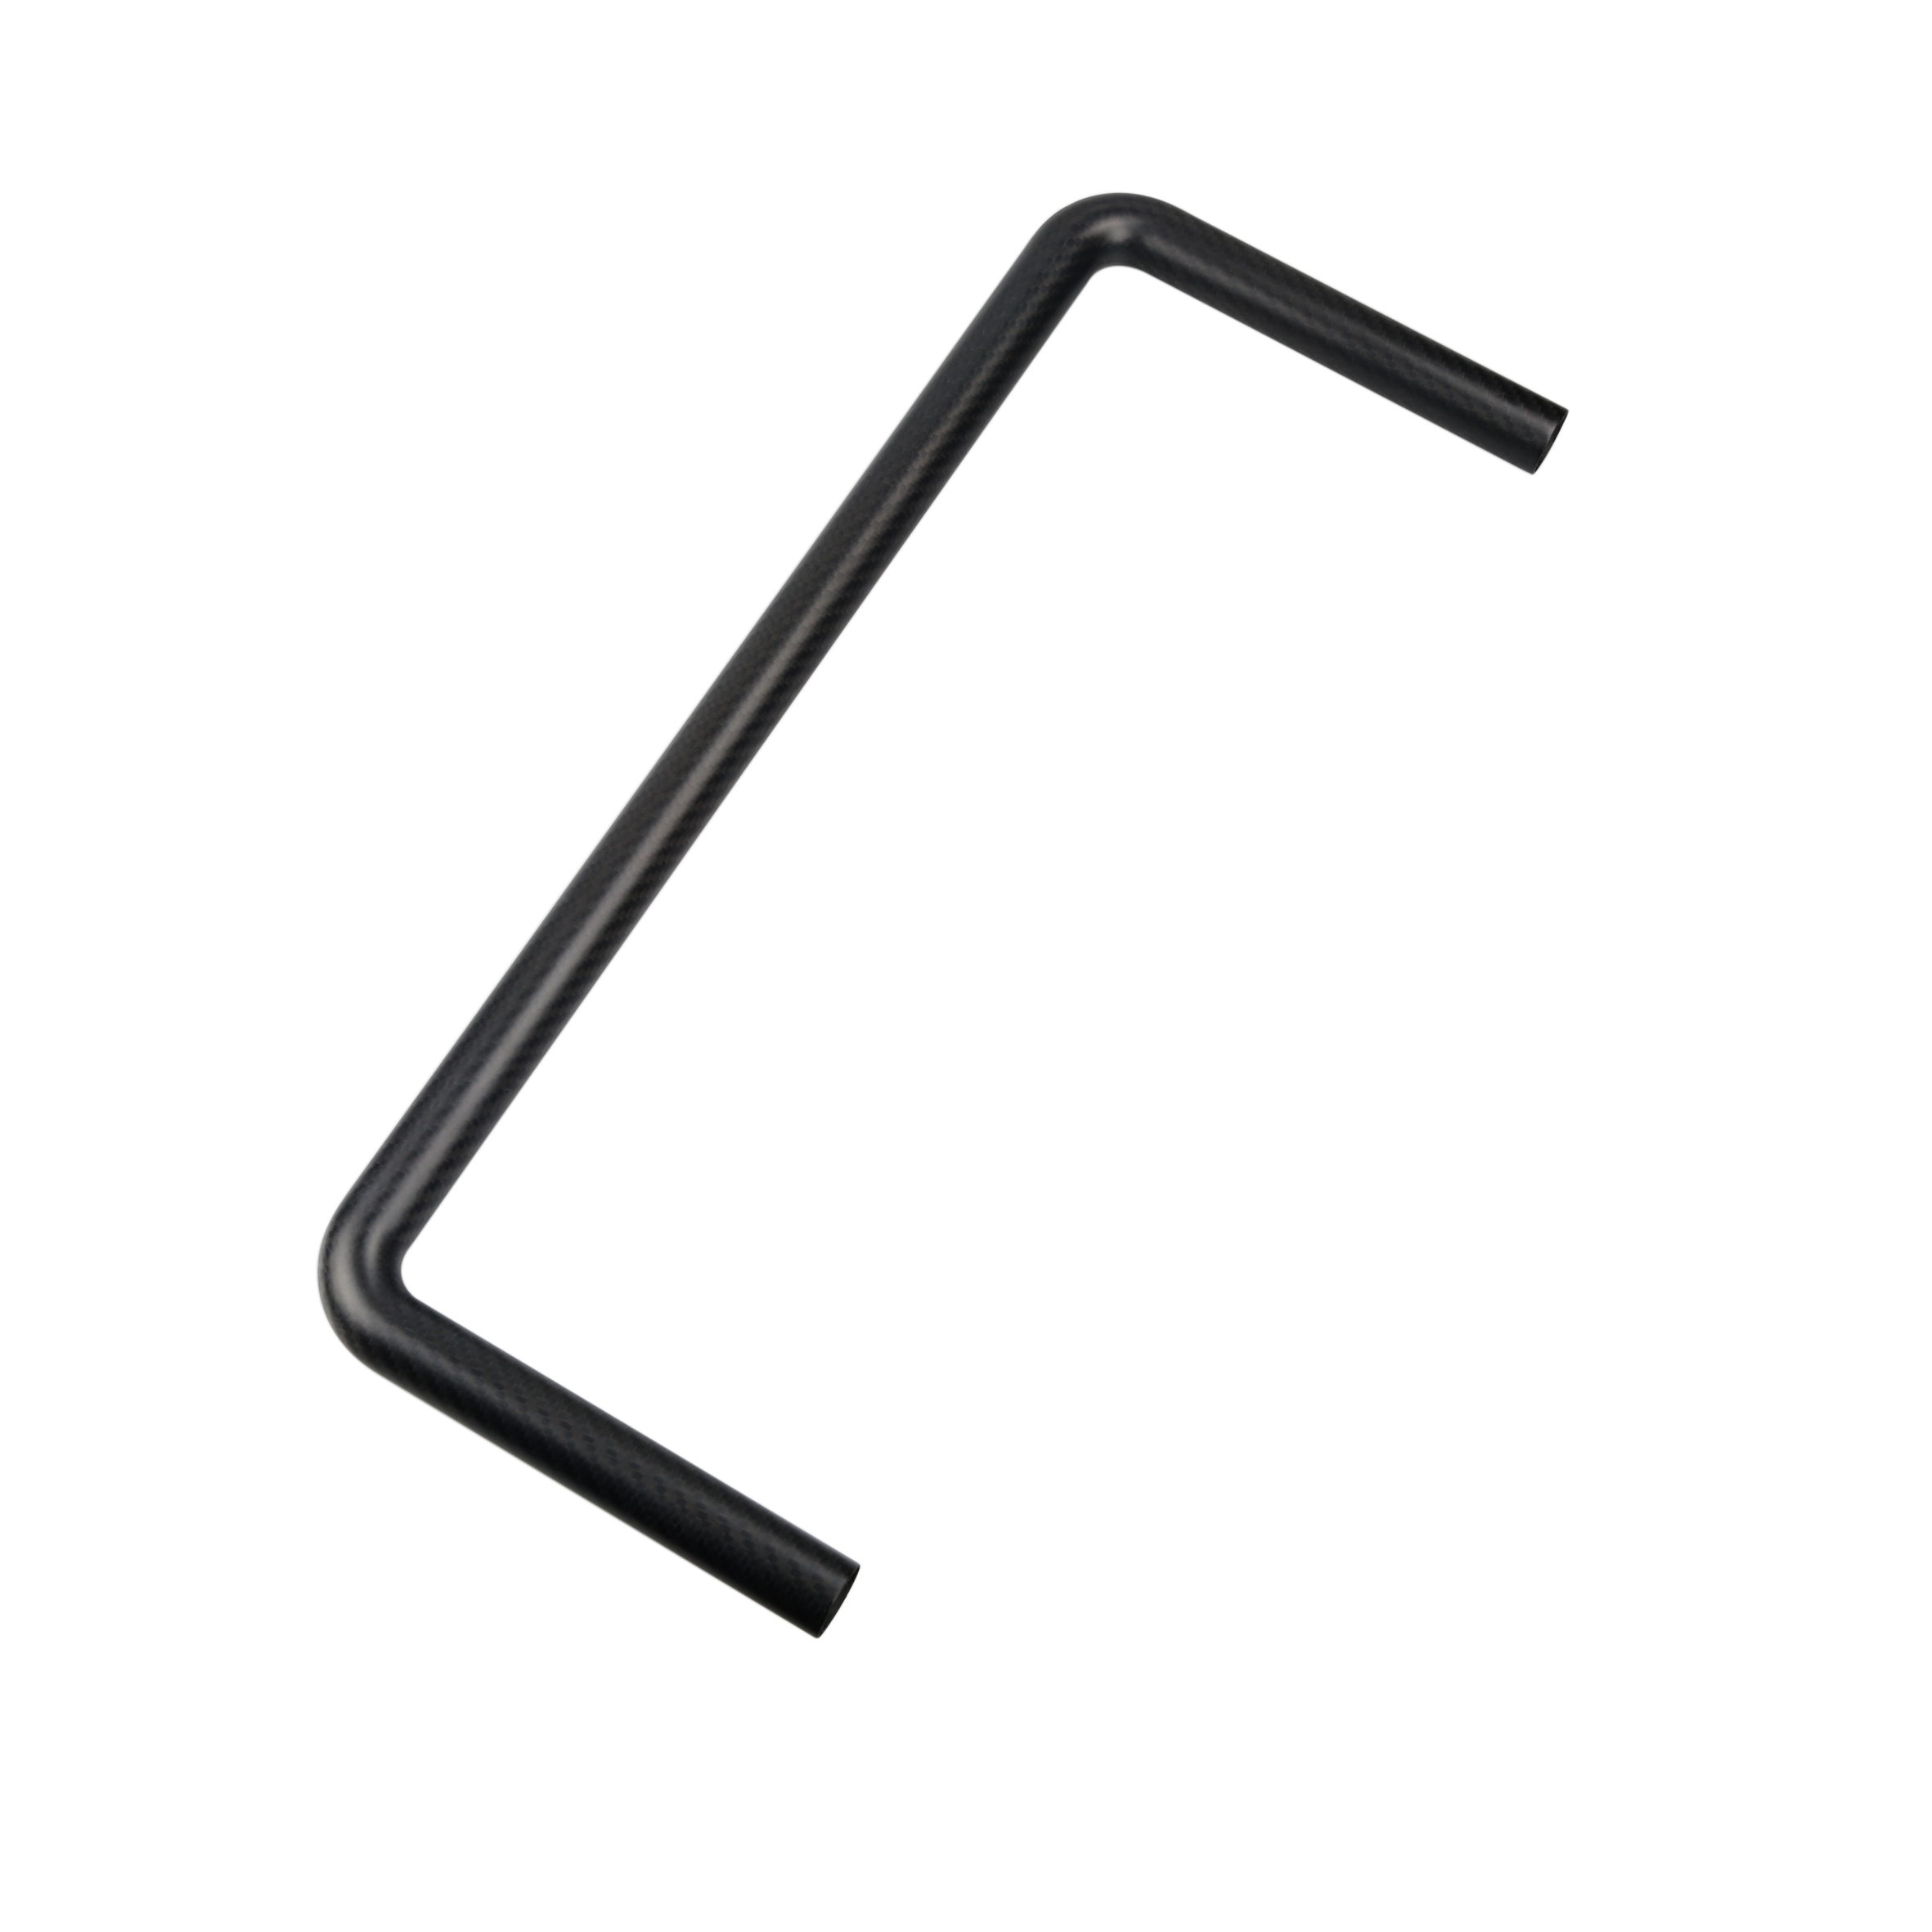 25mm tube carbon fiber handle integrated bend gimbal tube